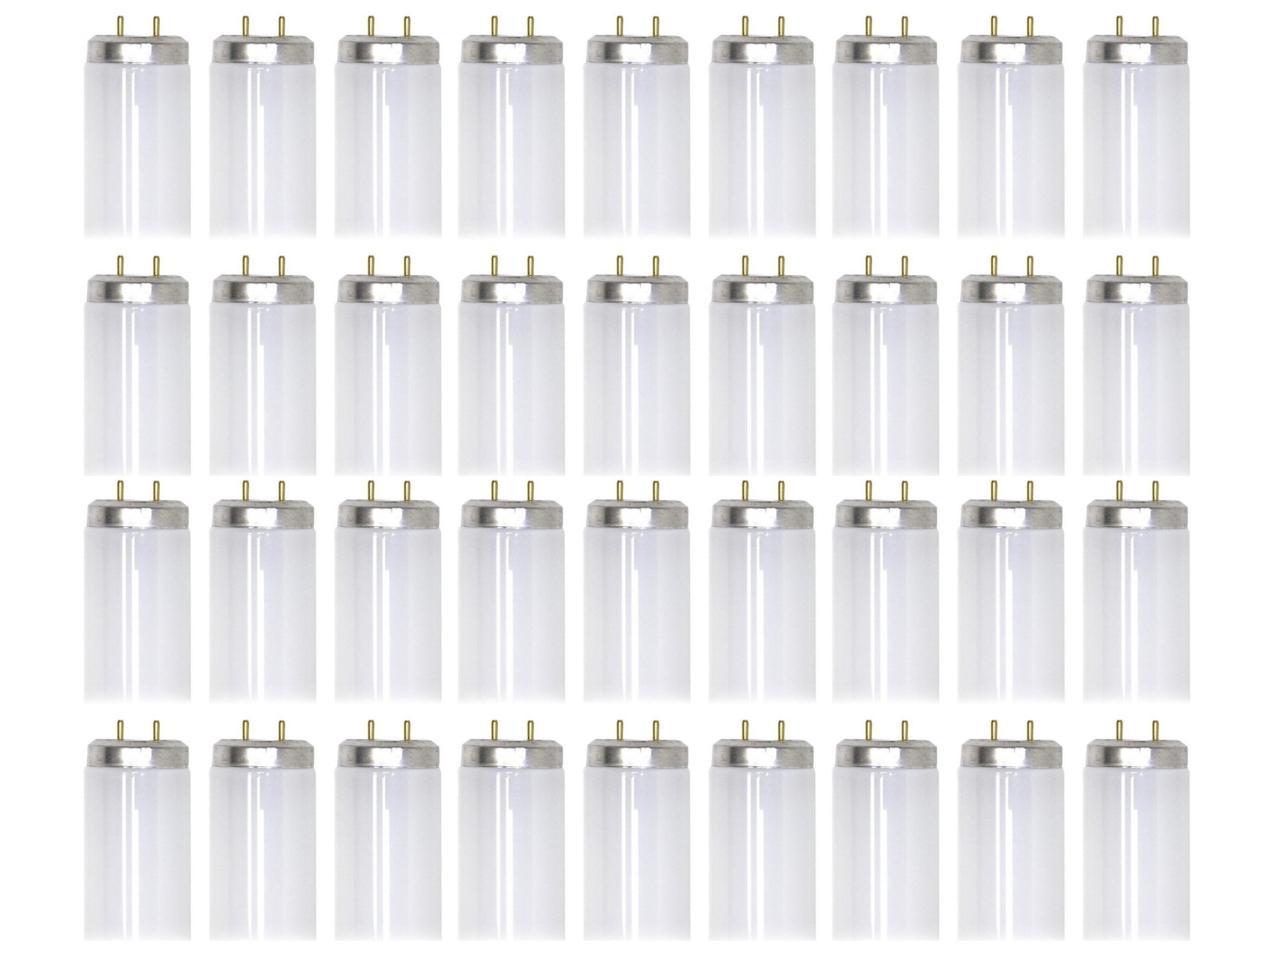 (36 lamps) GE 68850 Fluorescent Linear Lamp F32T8/SPX30/ECO2 32 watt T8 48 inch fluorescent tube, 3000K Color Temp